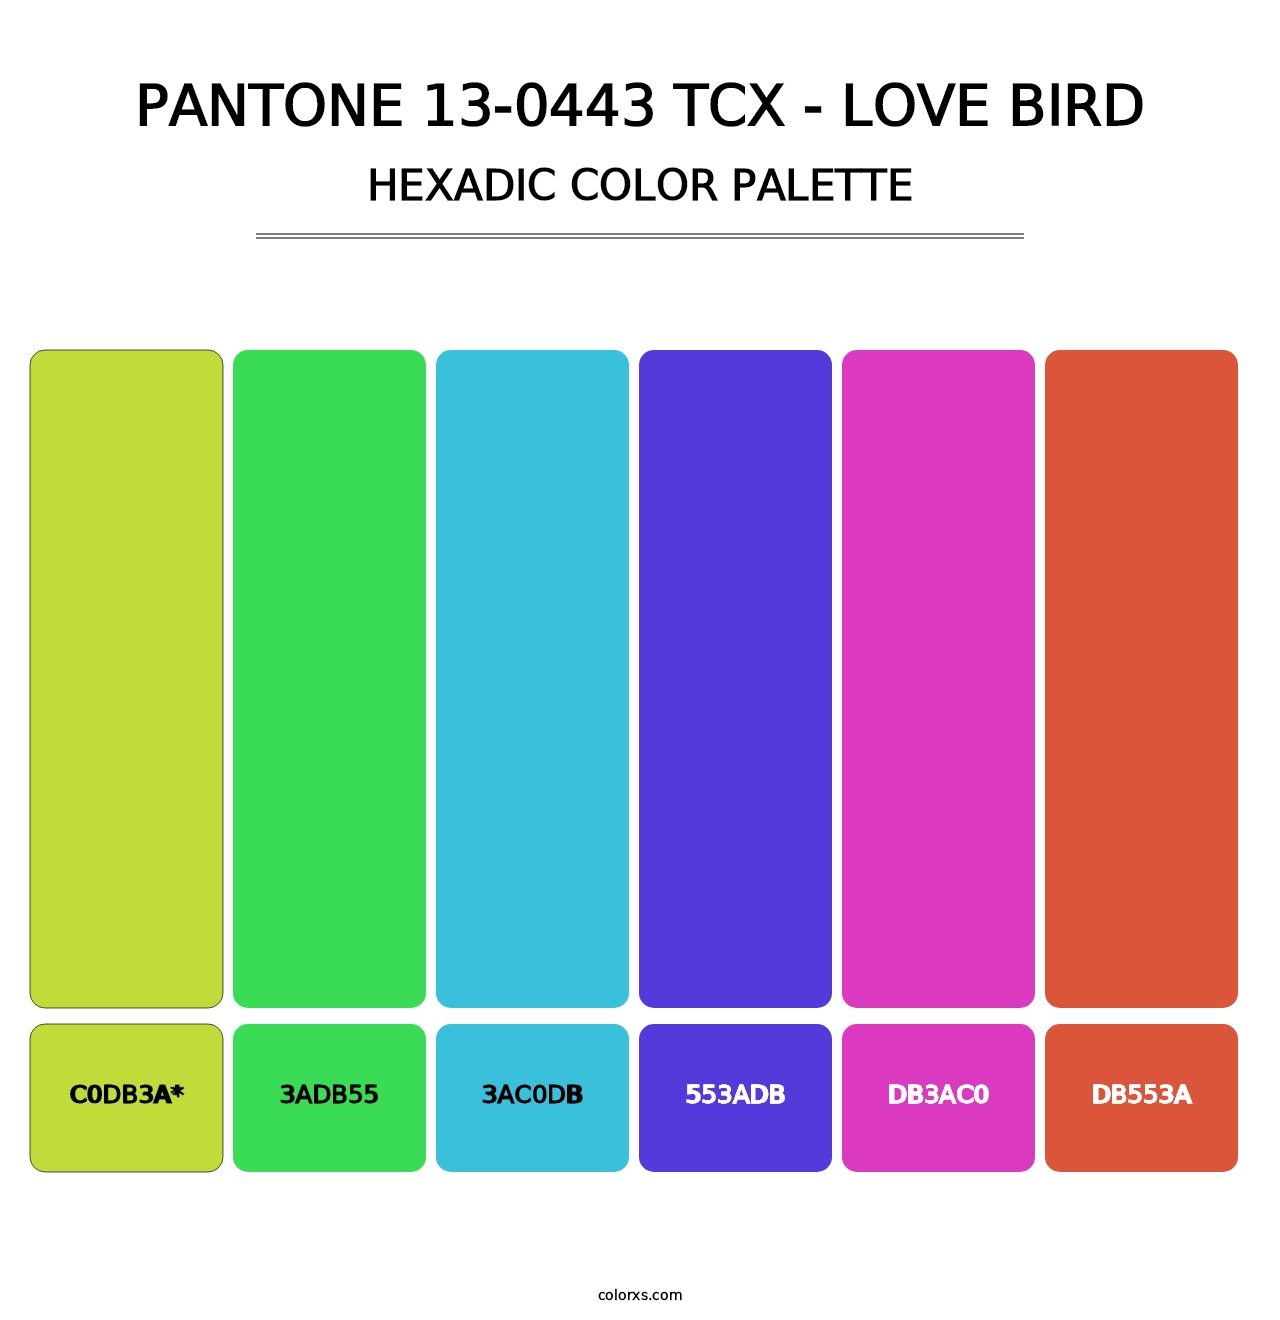 PANTONE 13-0443 TCX - Love Bird - Hexadic Color Palette